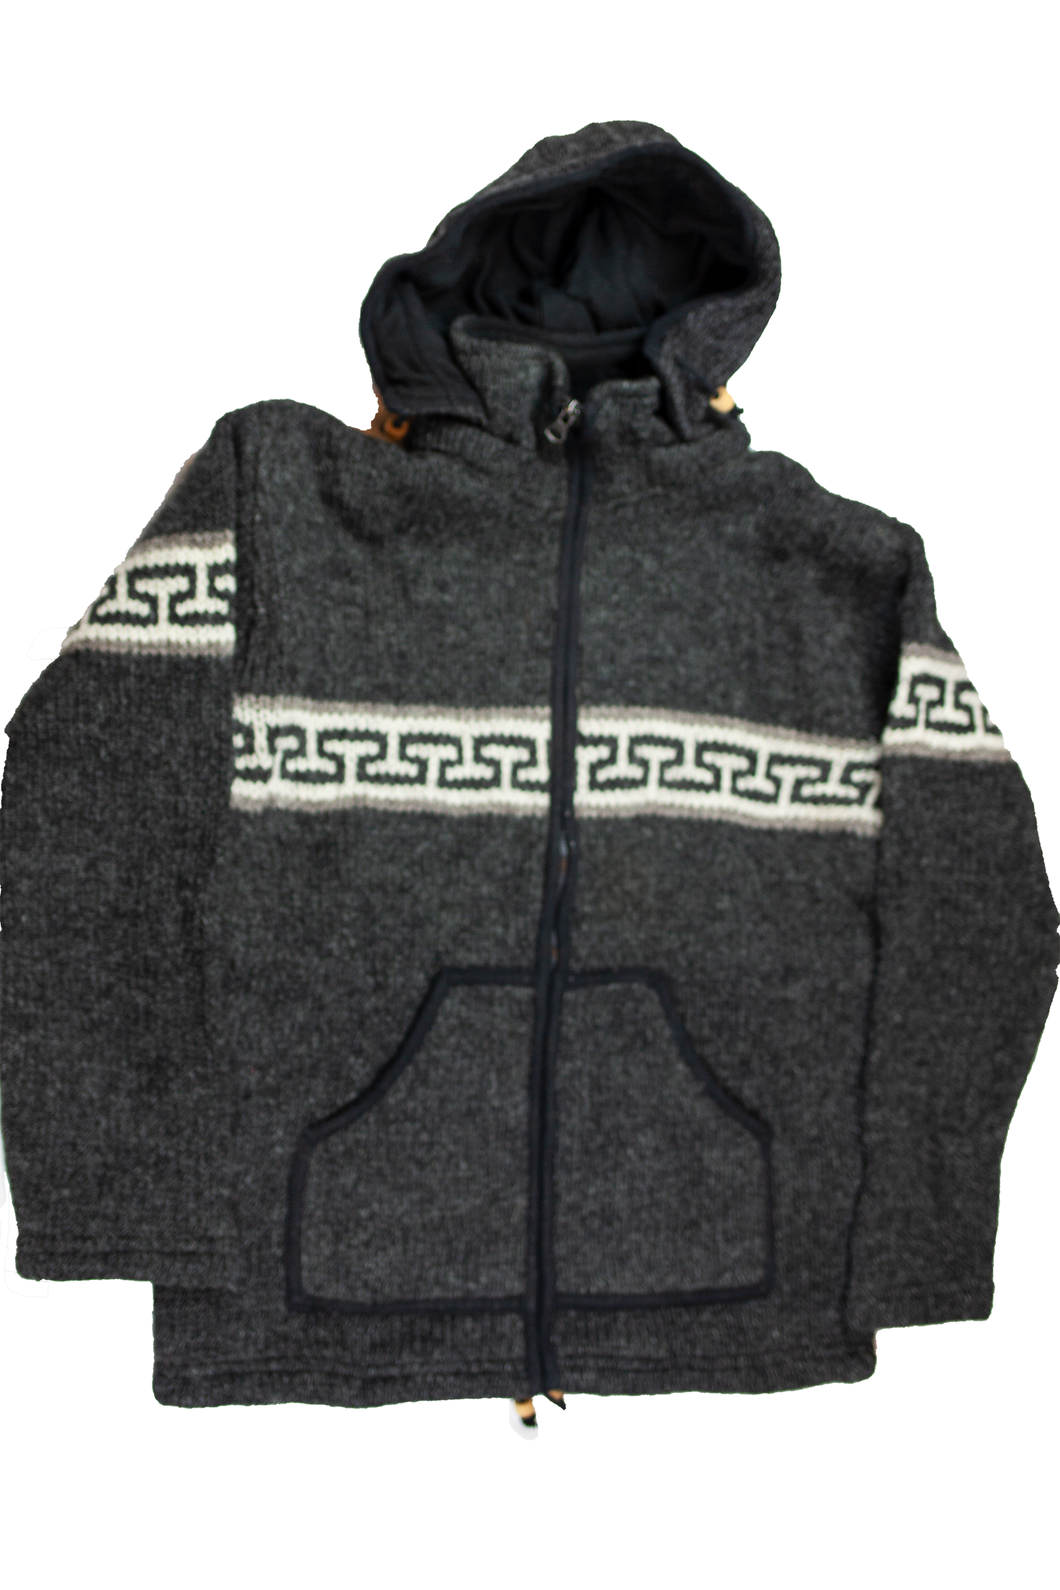 Hand knitted woolen jacket/sweater with soft inner fleece - HMPWJ11